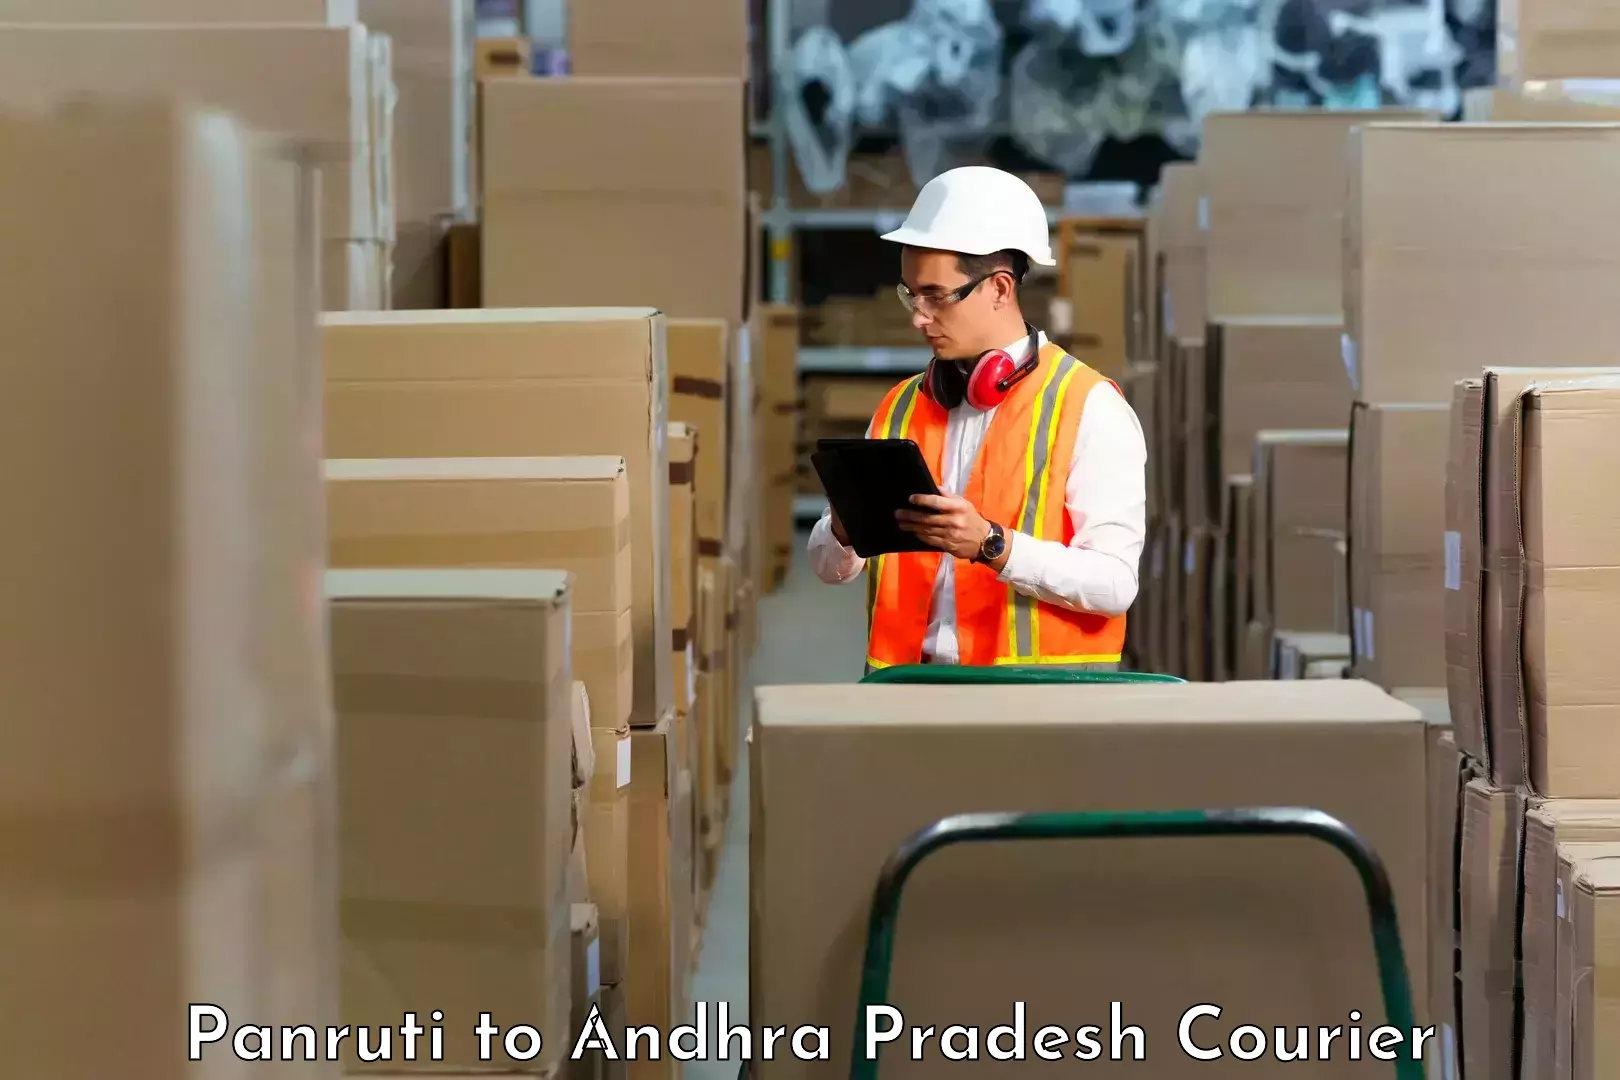 Courier service partnerships Panruti to Challapalli